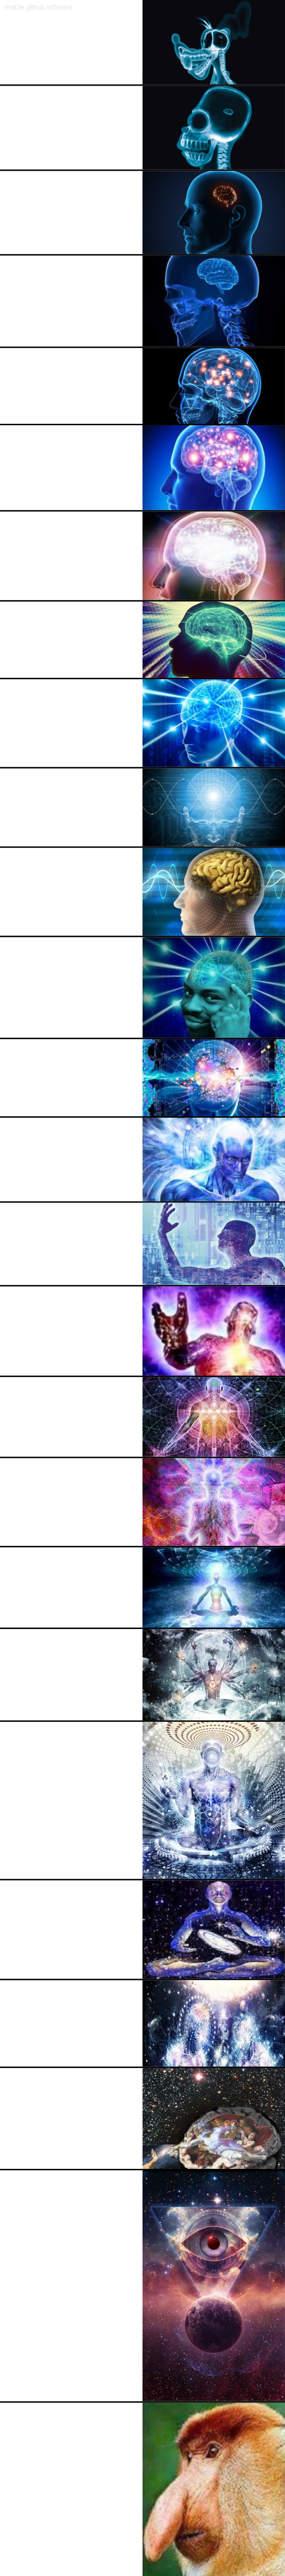 Expanding brain 26 panels Blank Meme Template